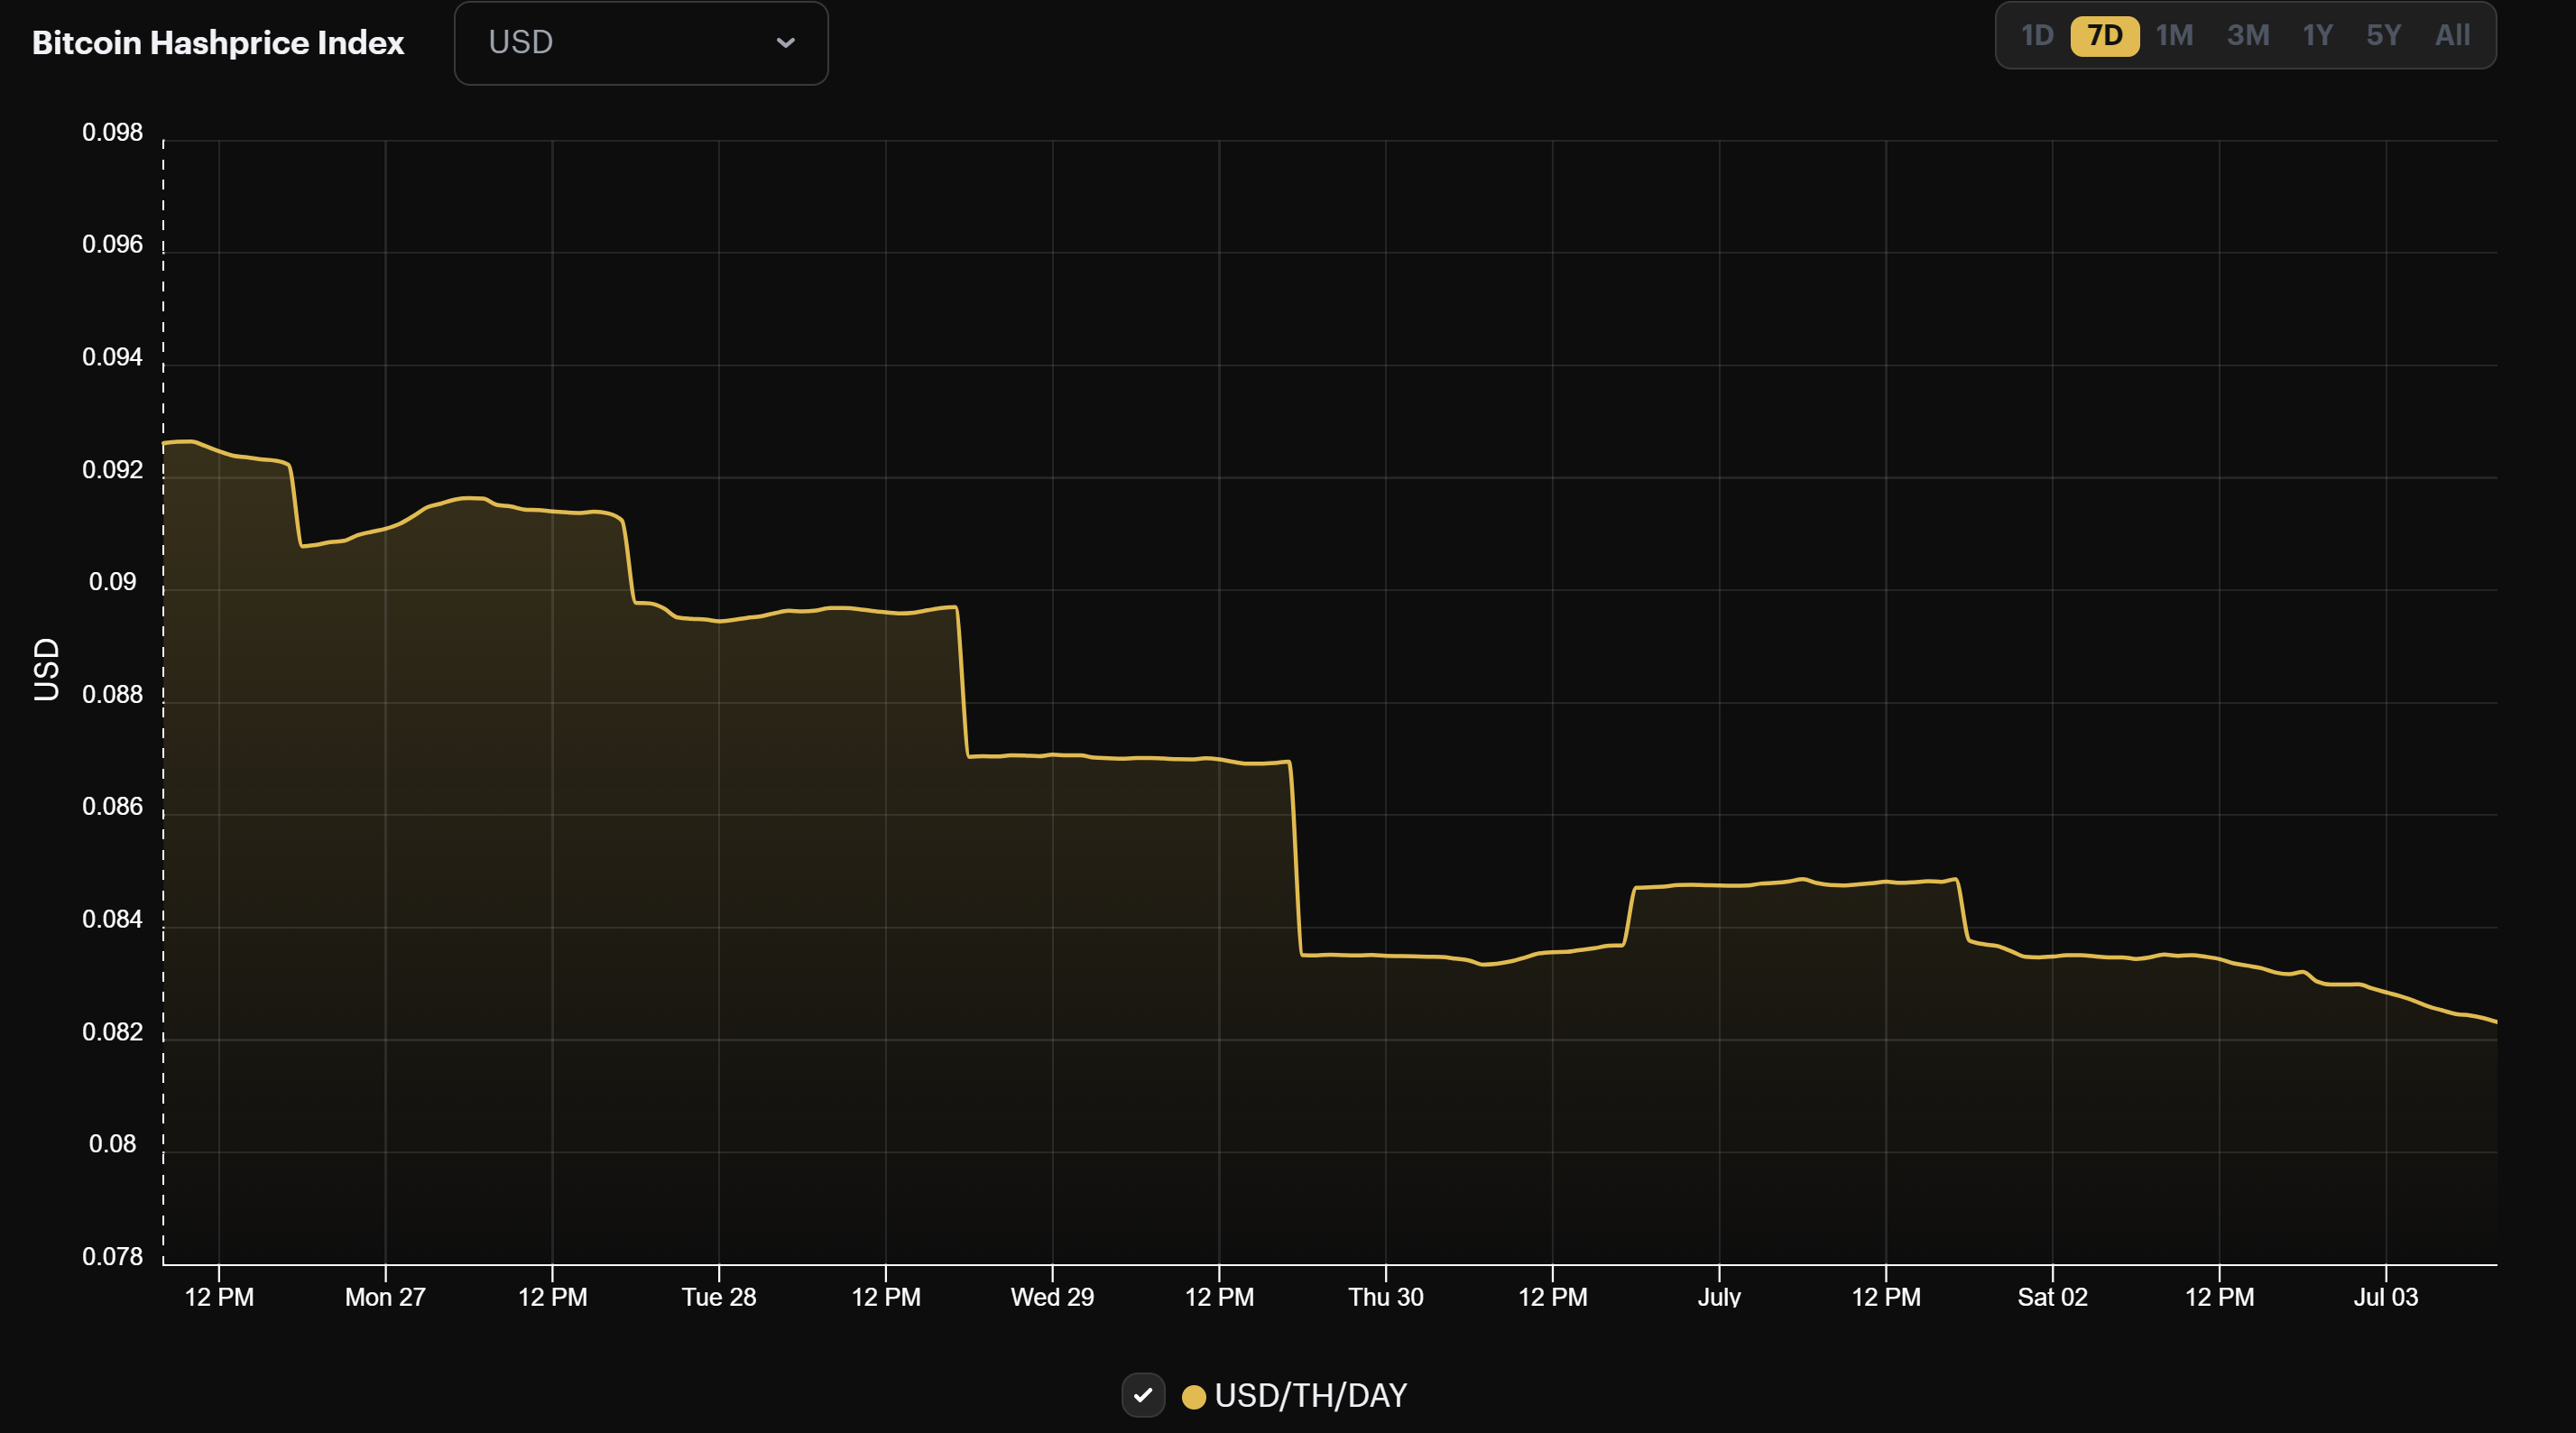 Bitcoin mining USD hashprice (June 26 - July 3, 2022)